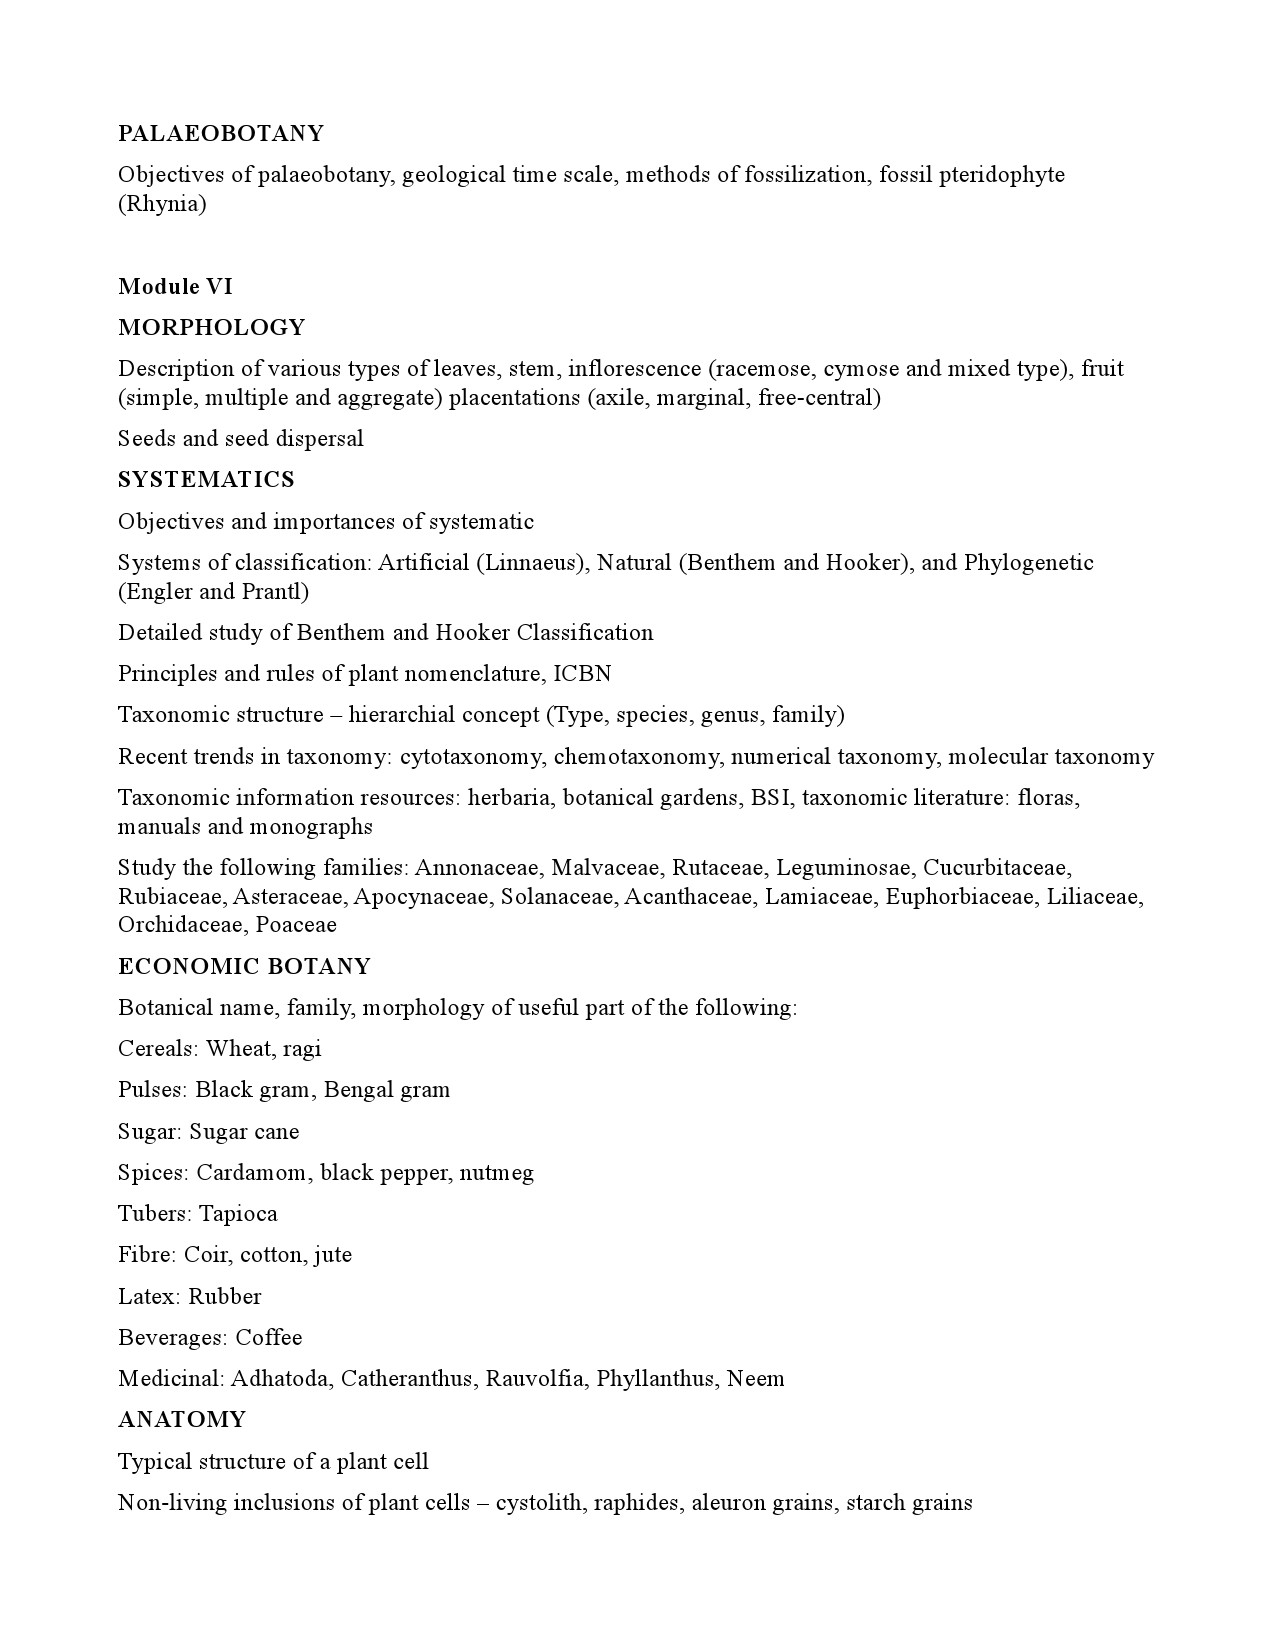 High School Assistant Natural Science Part A Kerala Examination Syllabus 2021 - Notification Image 10